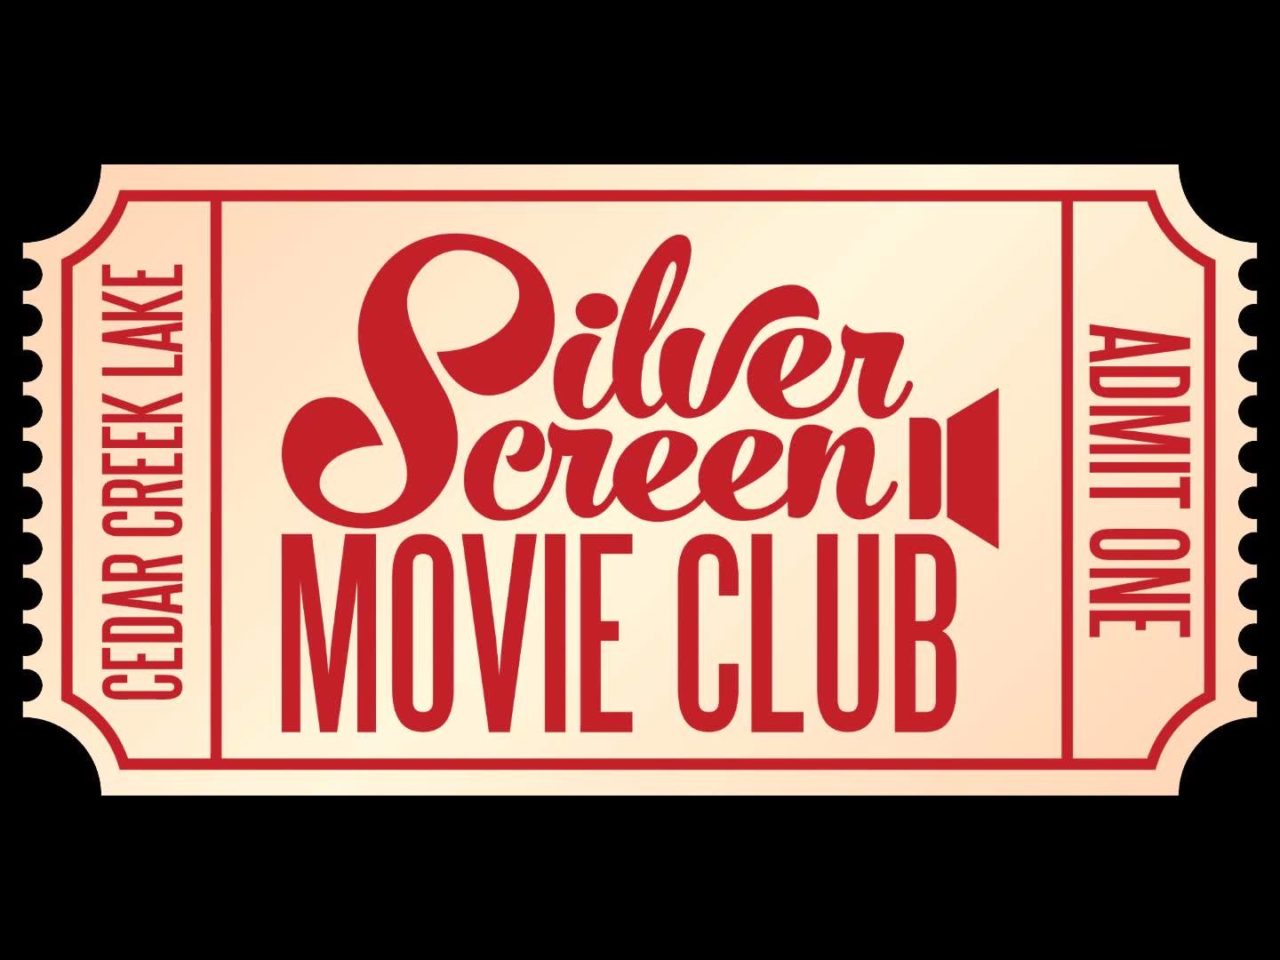 Silver Screen Movie Club - Cedar Creek Lake 2 HOmetown silverscreen CedarCreekLake.Online